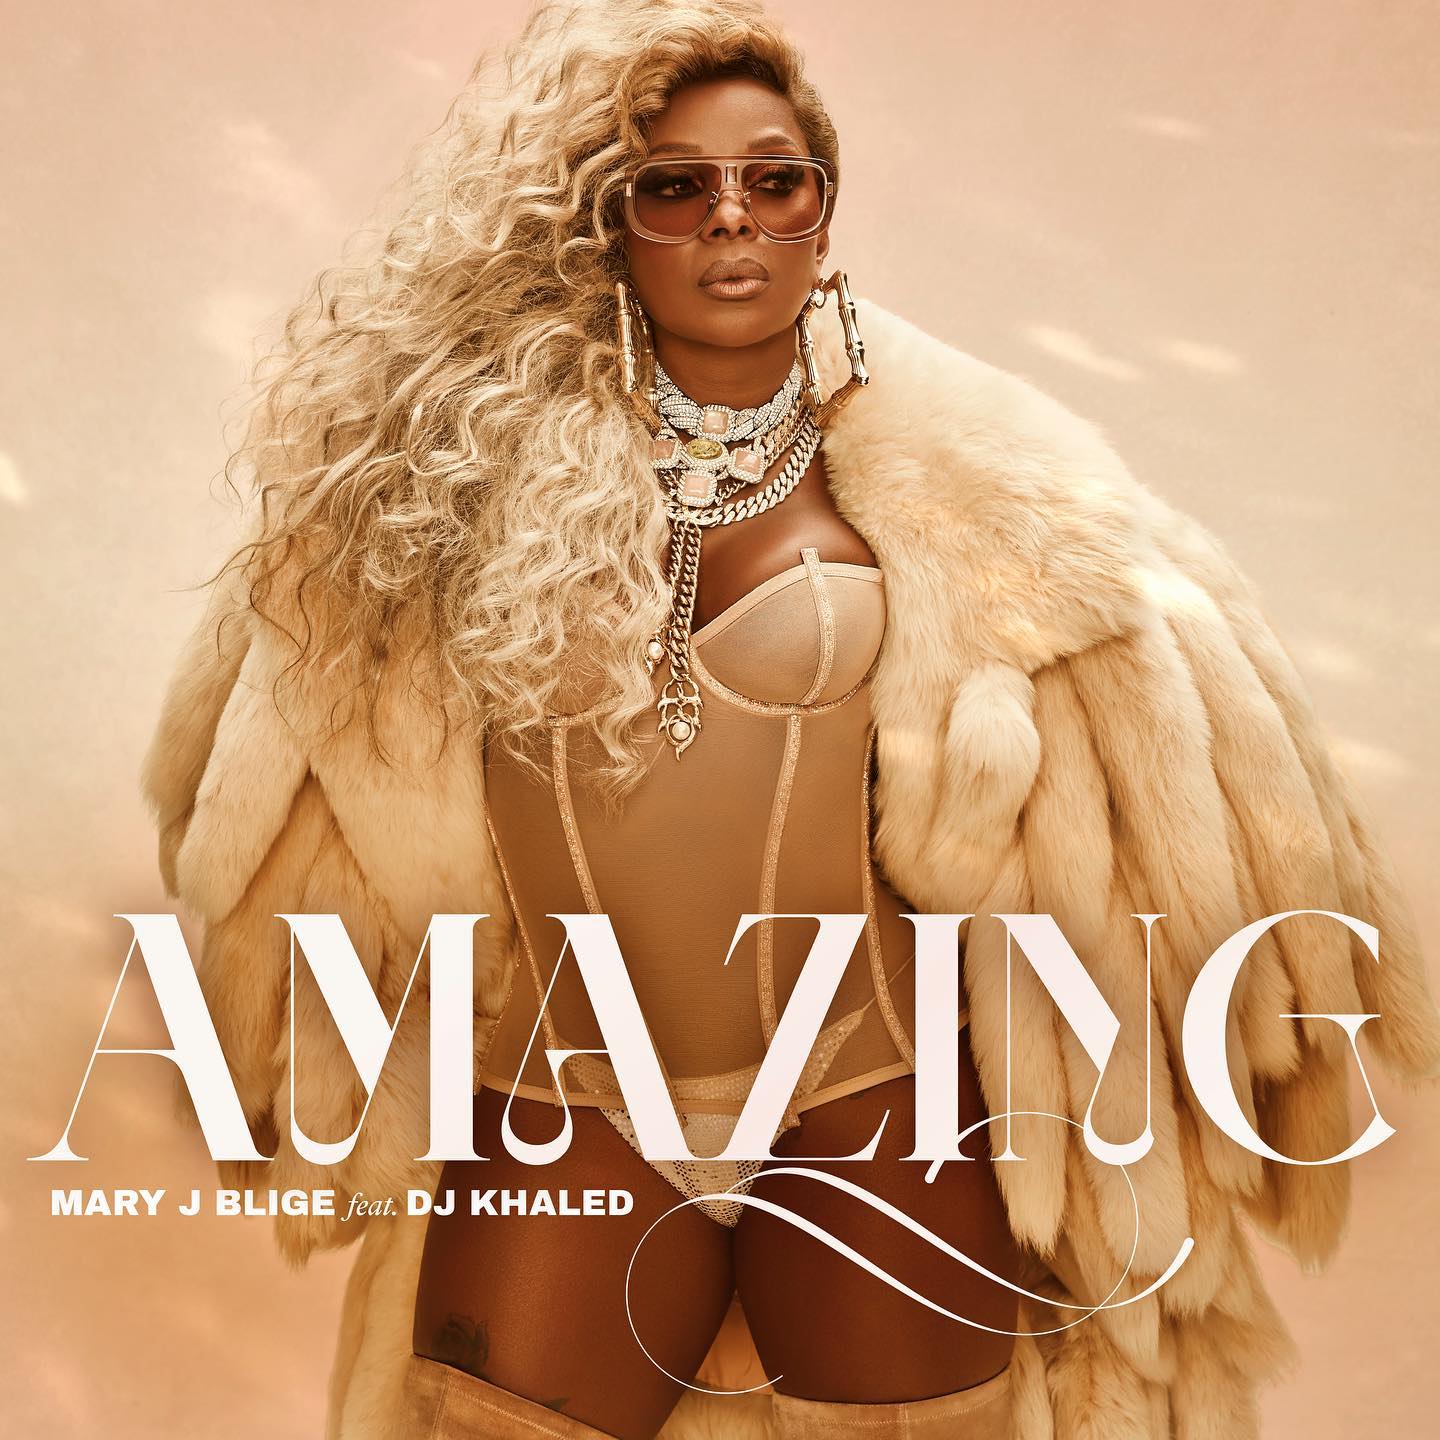 Letra de "Amazing" - Mary J. Blidge & DJ Khaled